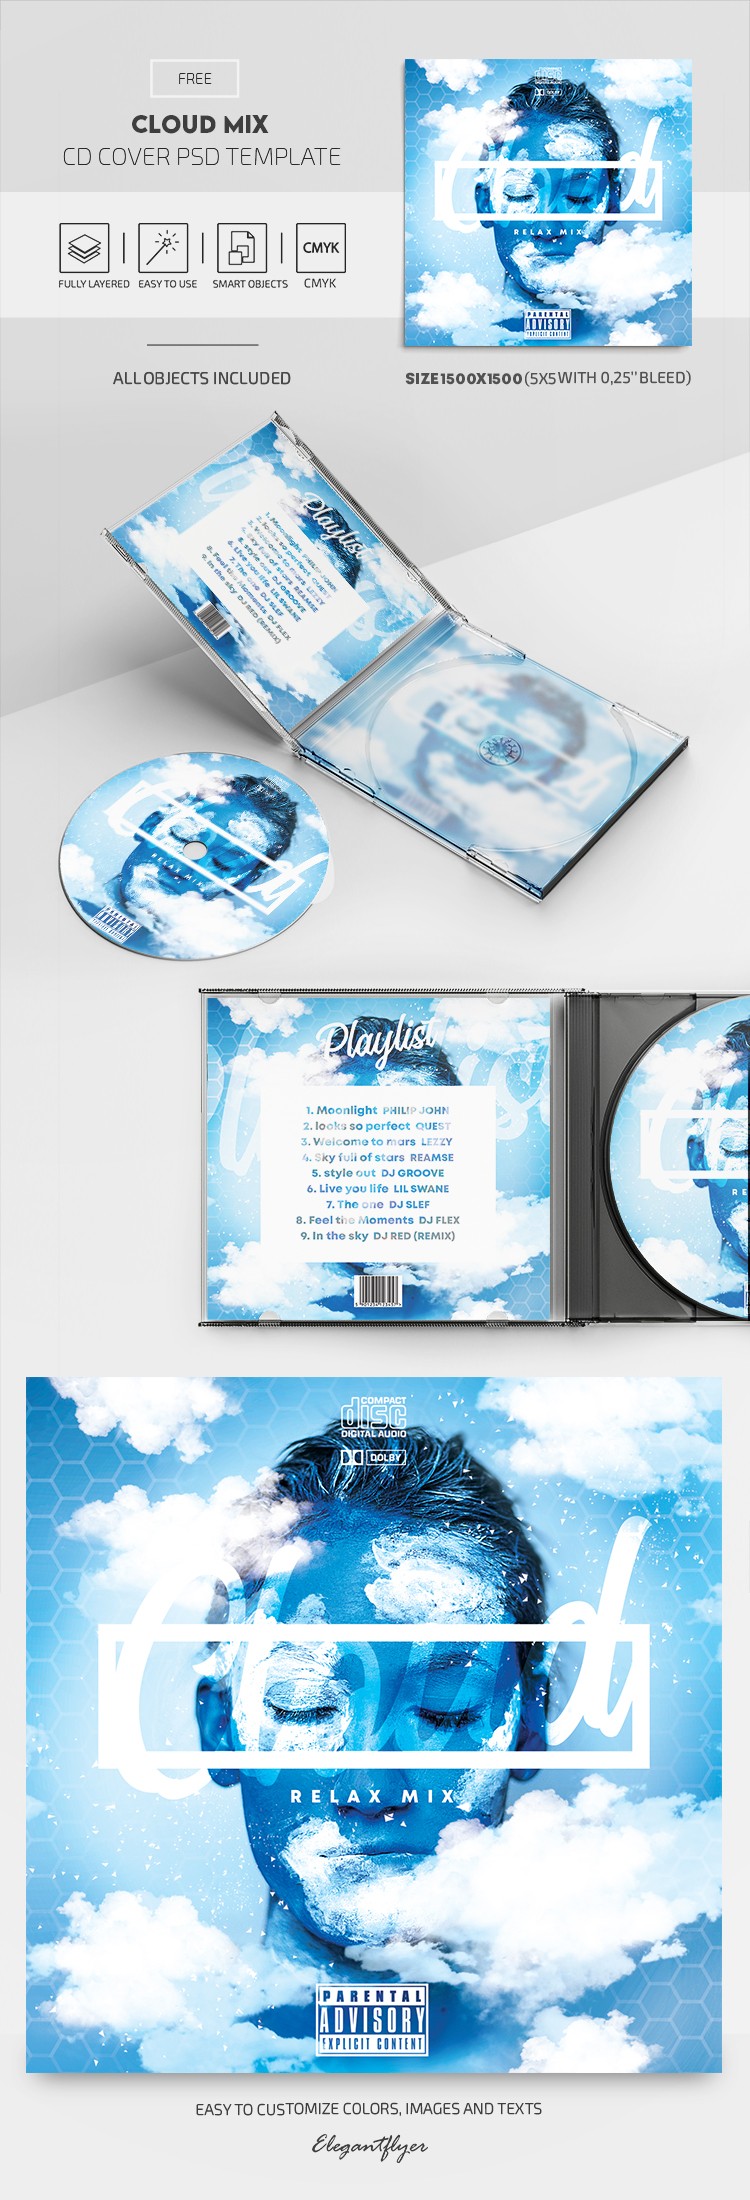 Capa do CD Cloud Mix by ElegantFlyer